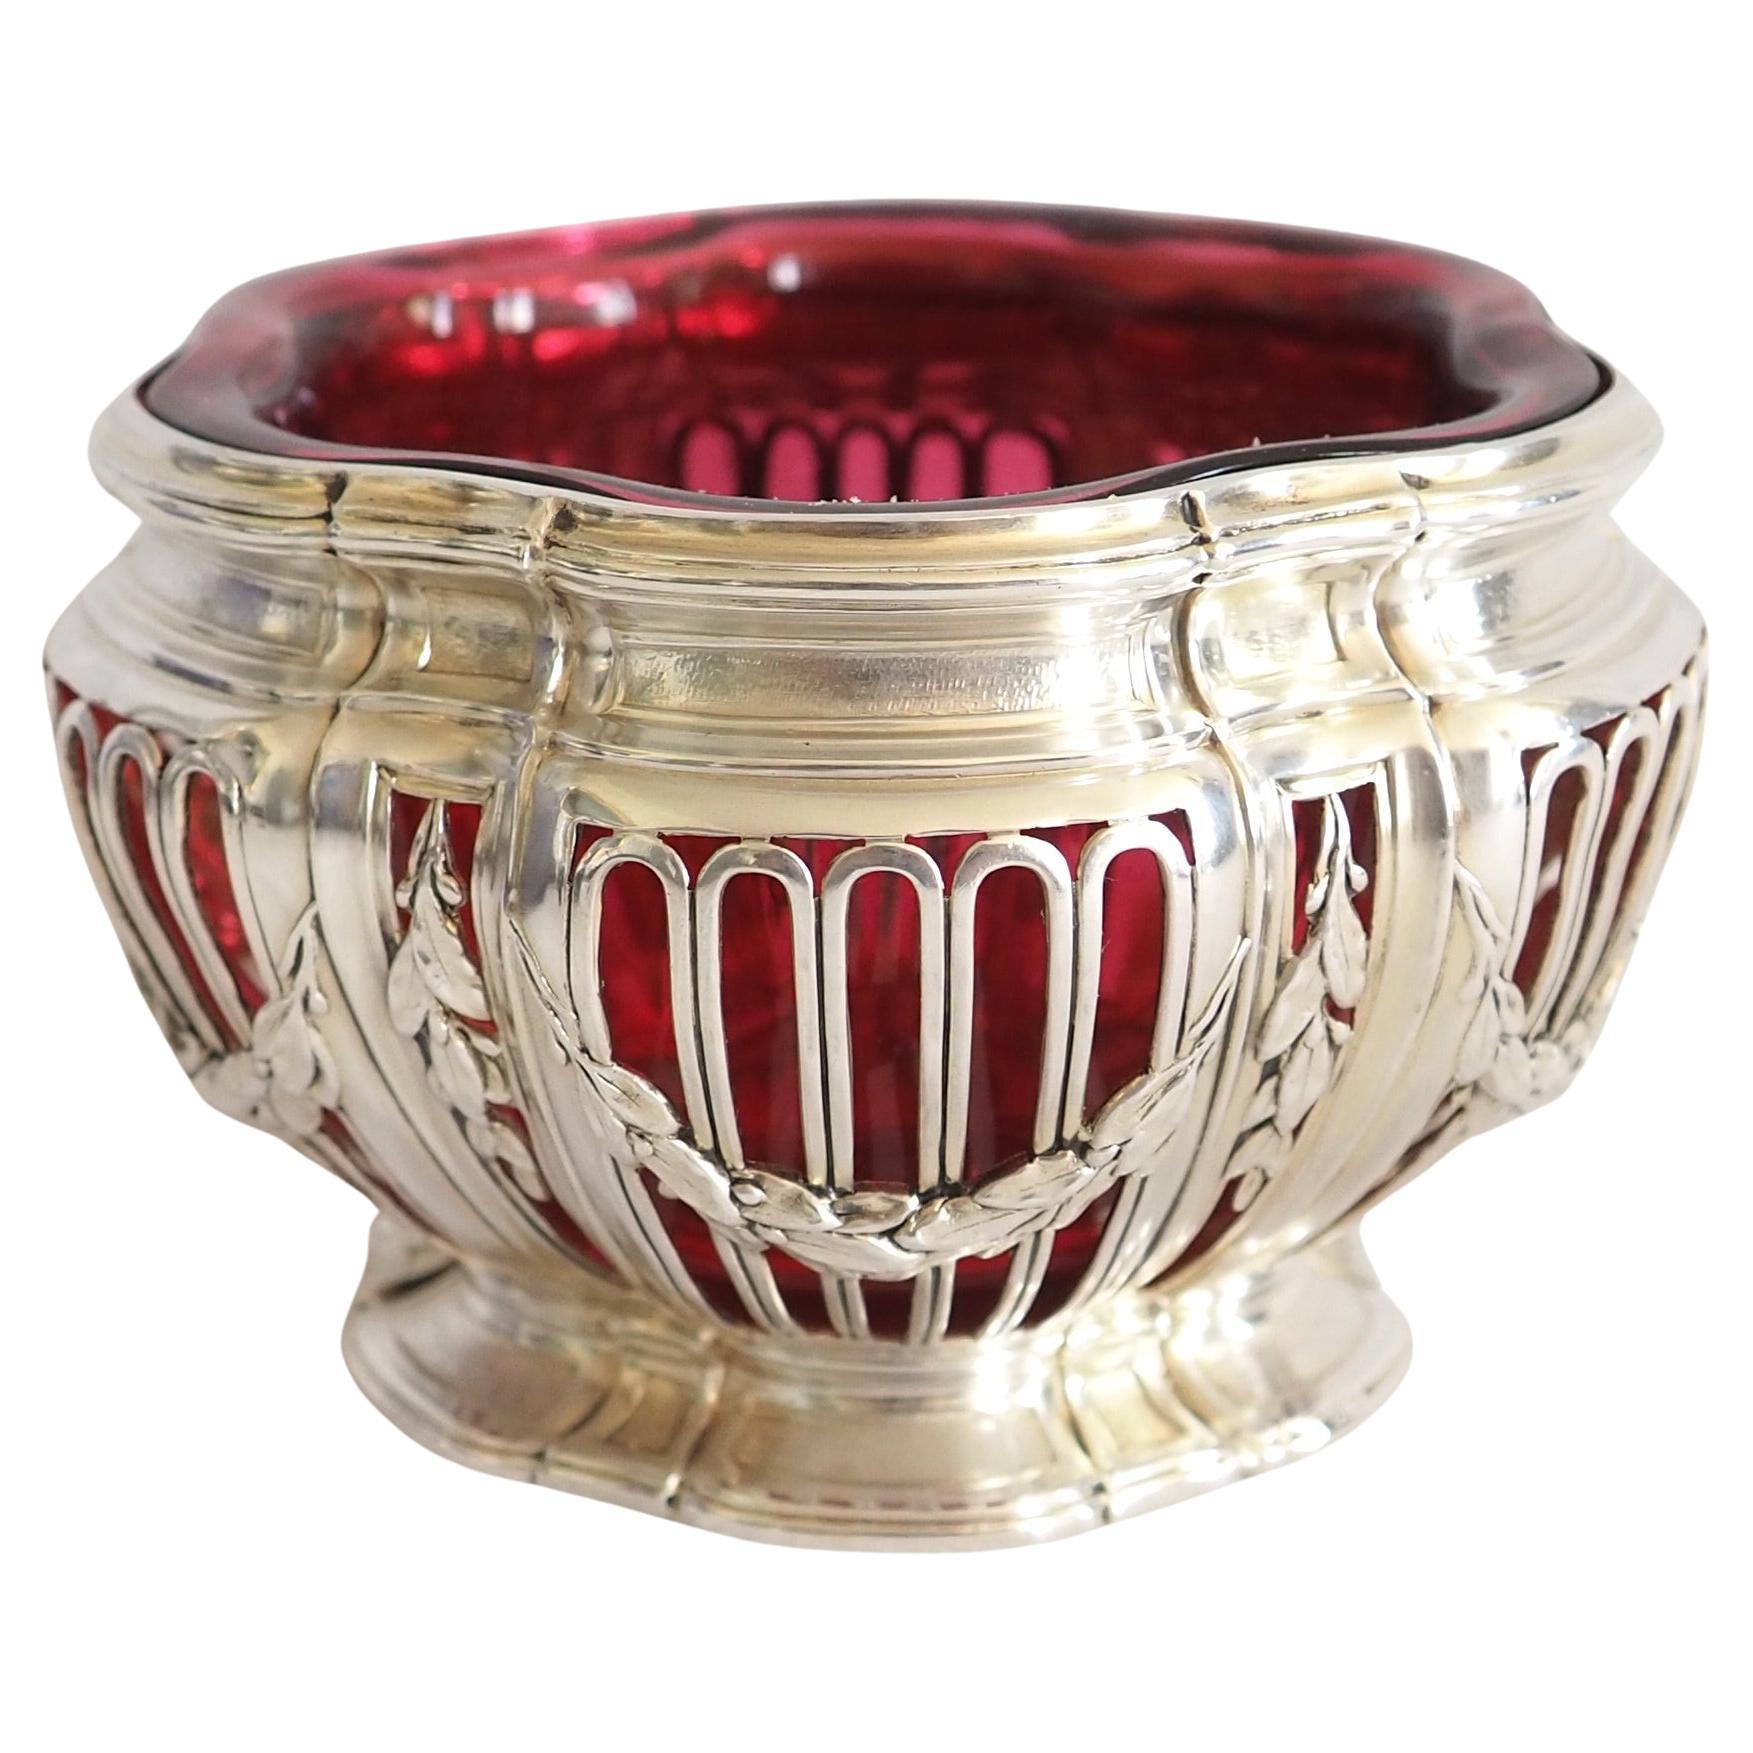 Sterling silver, vermeil and Baccarat crystal Louis XVI style bowl / ramekin